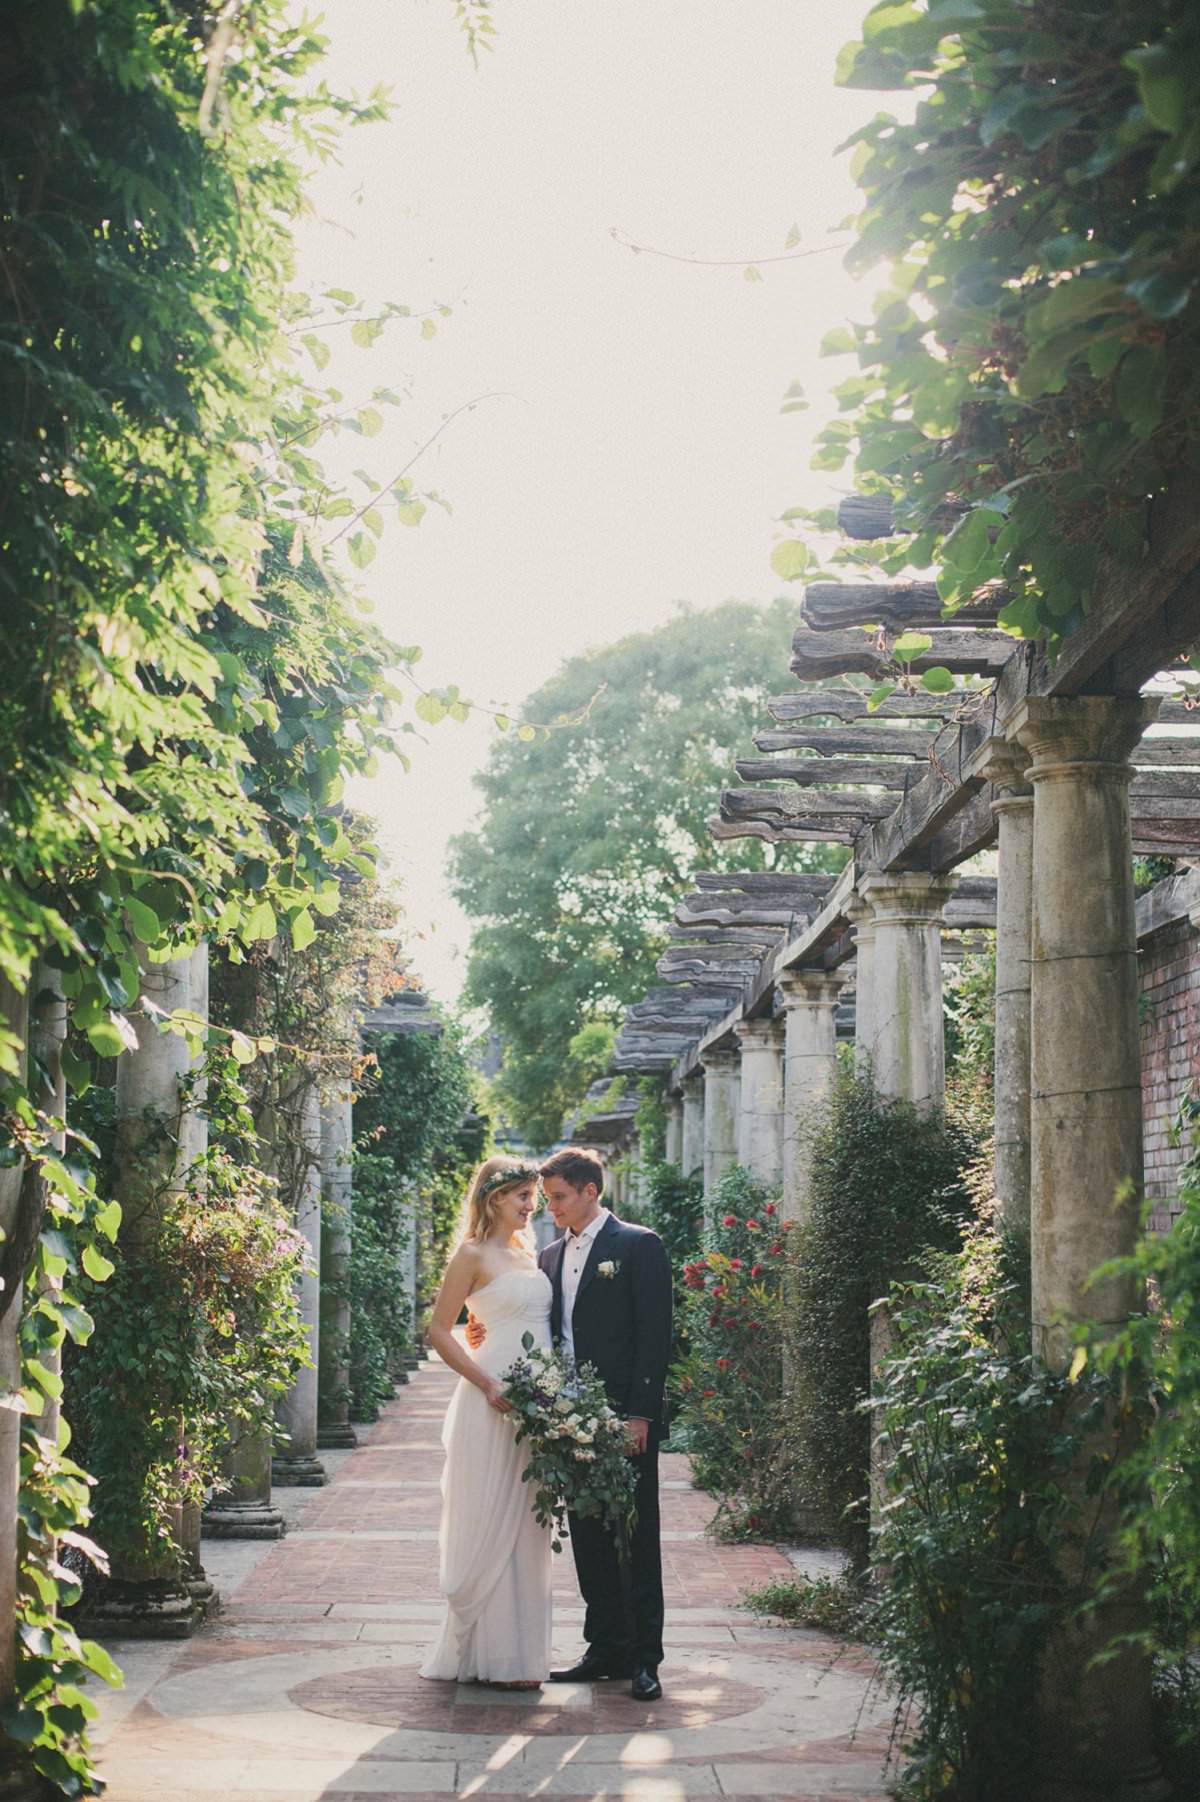 Natural-Boho-Artistic-Wedding-Elopement-Photography-Hampstead-Heath-Hill-Garden-Pergola-092